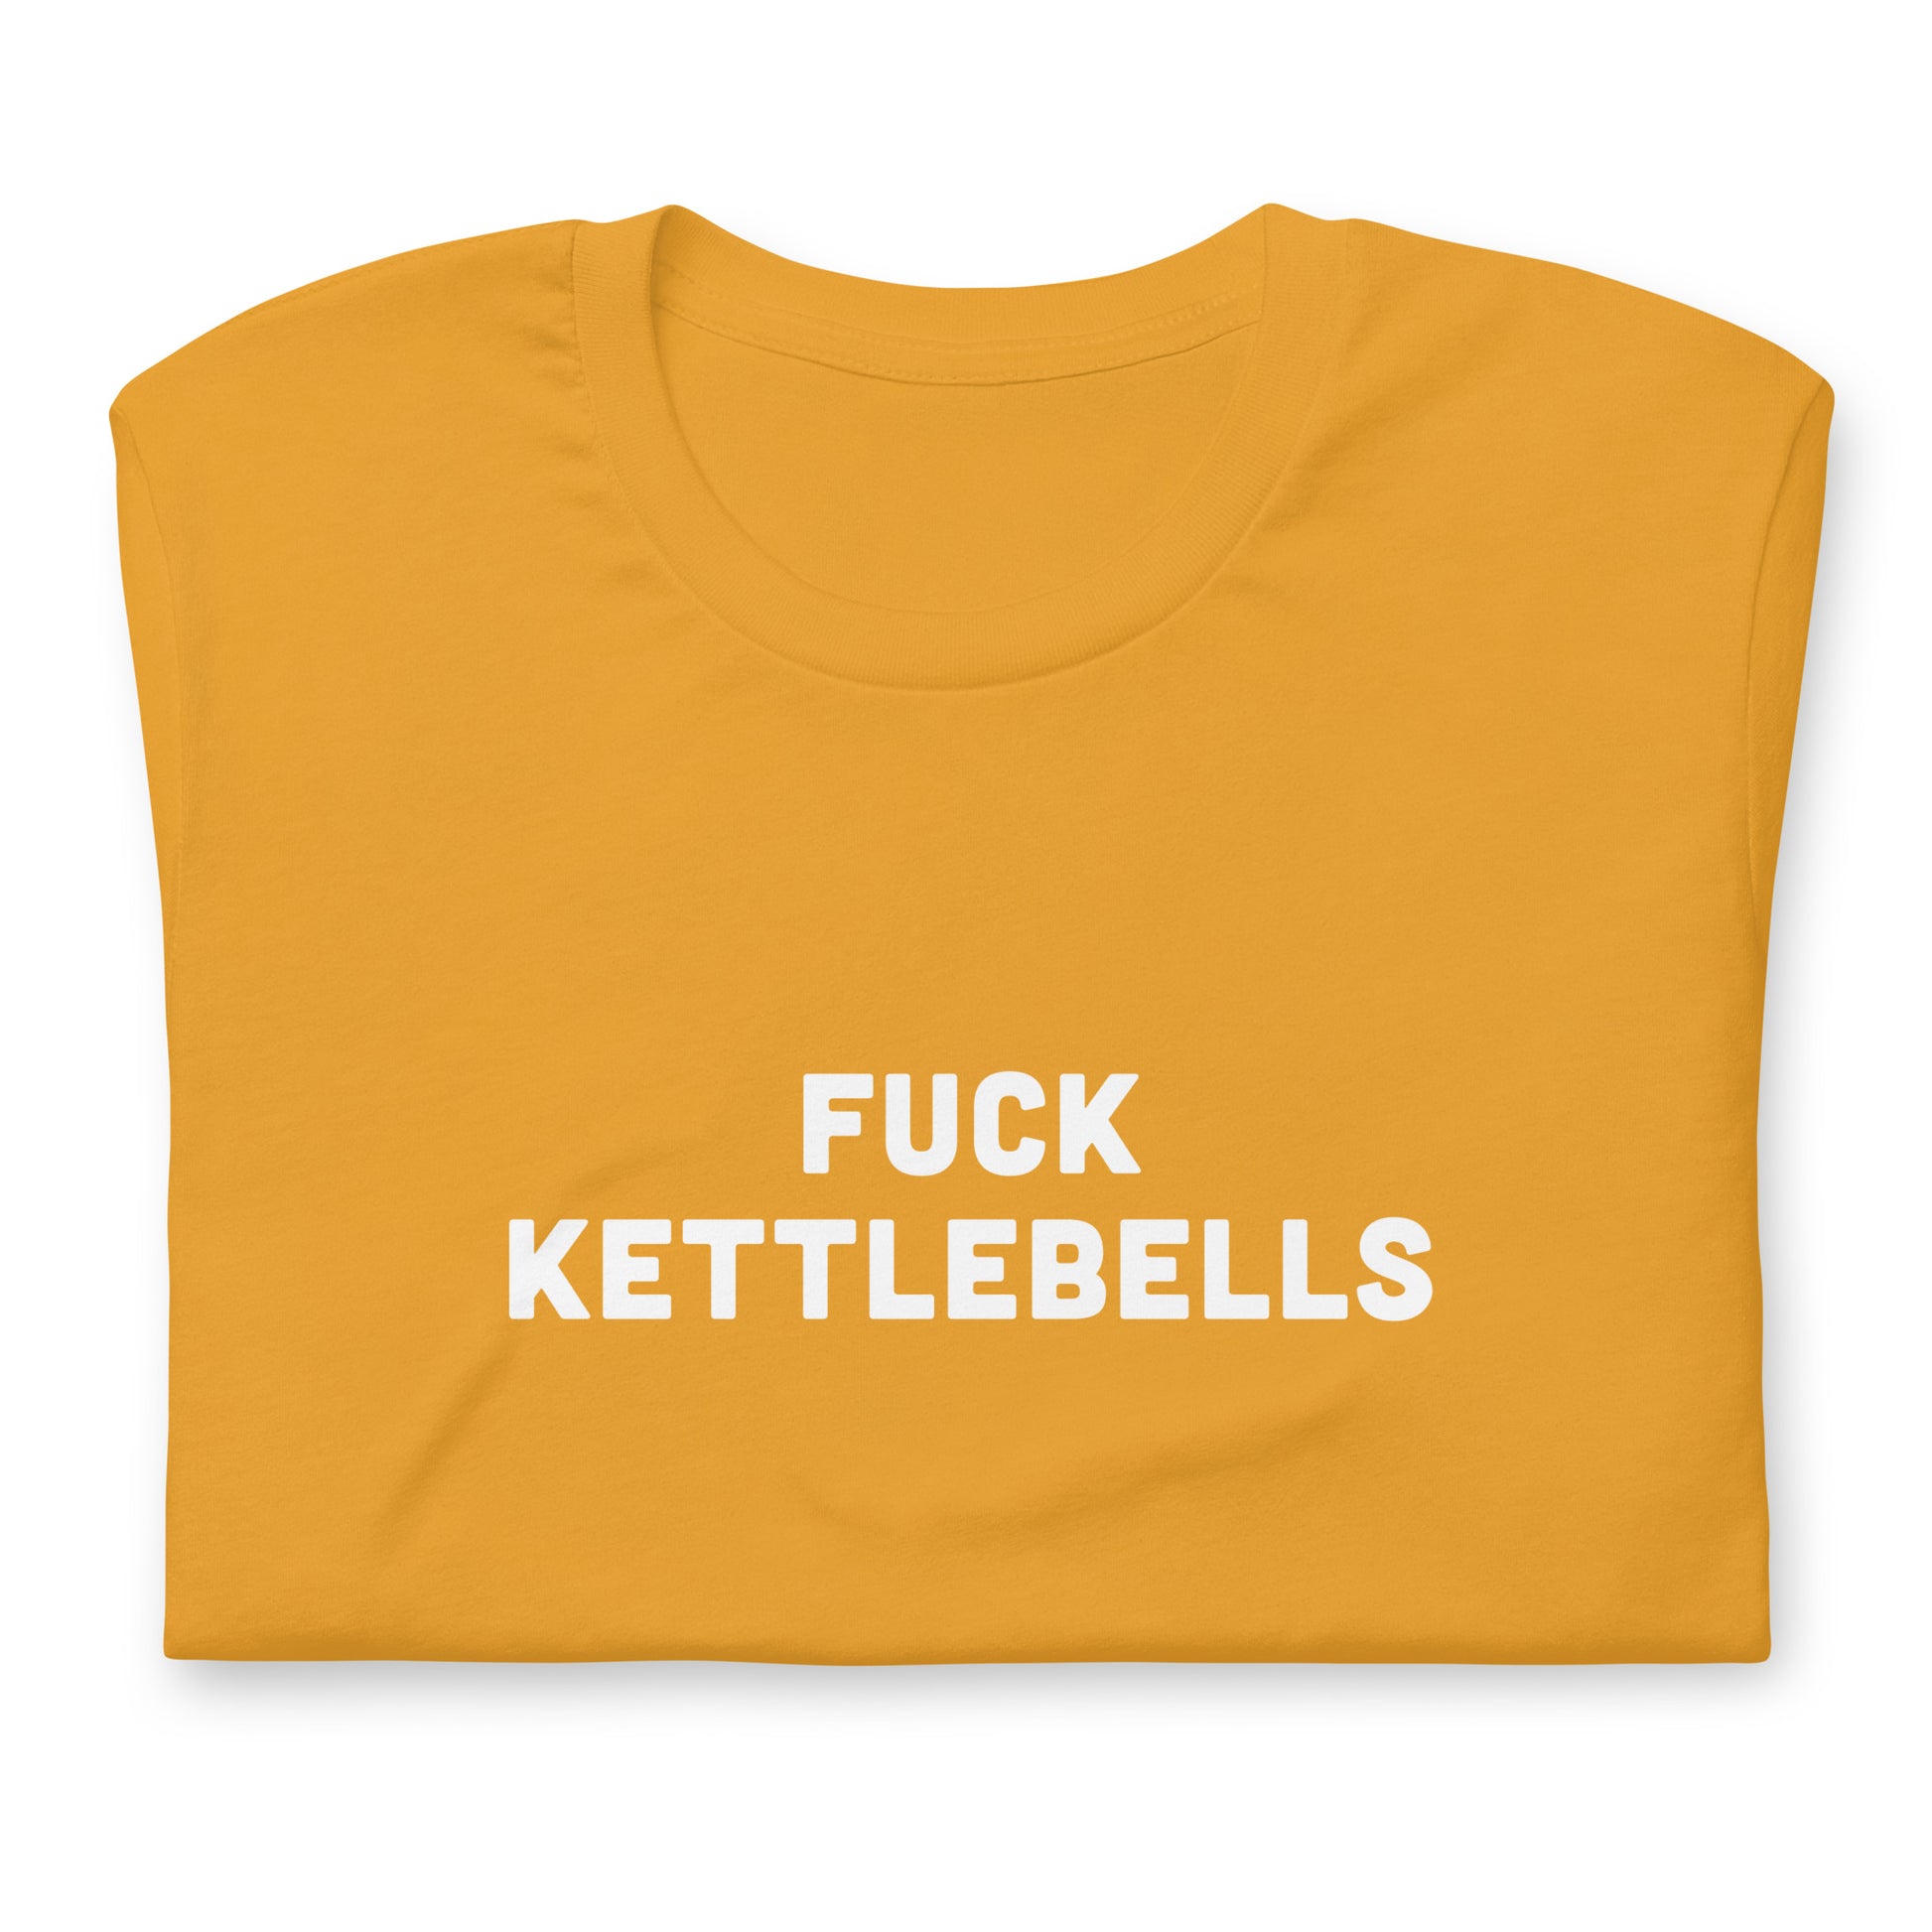 Fuck Kettlebells T-Shirt Size L Color Forest